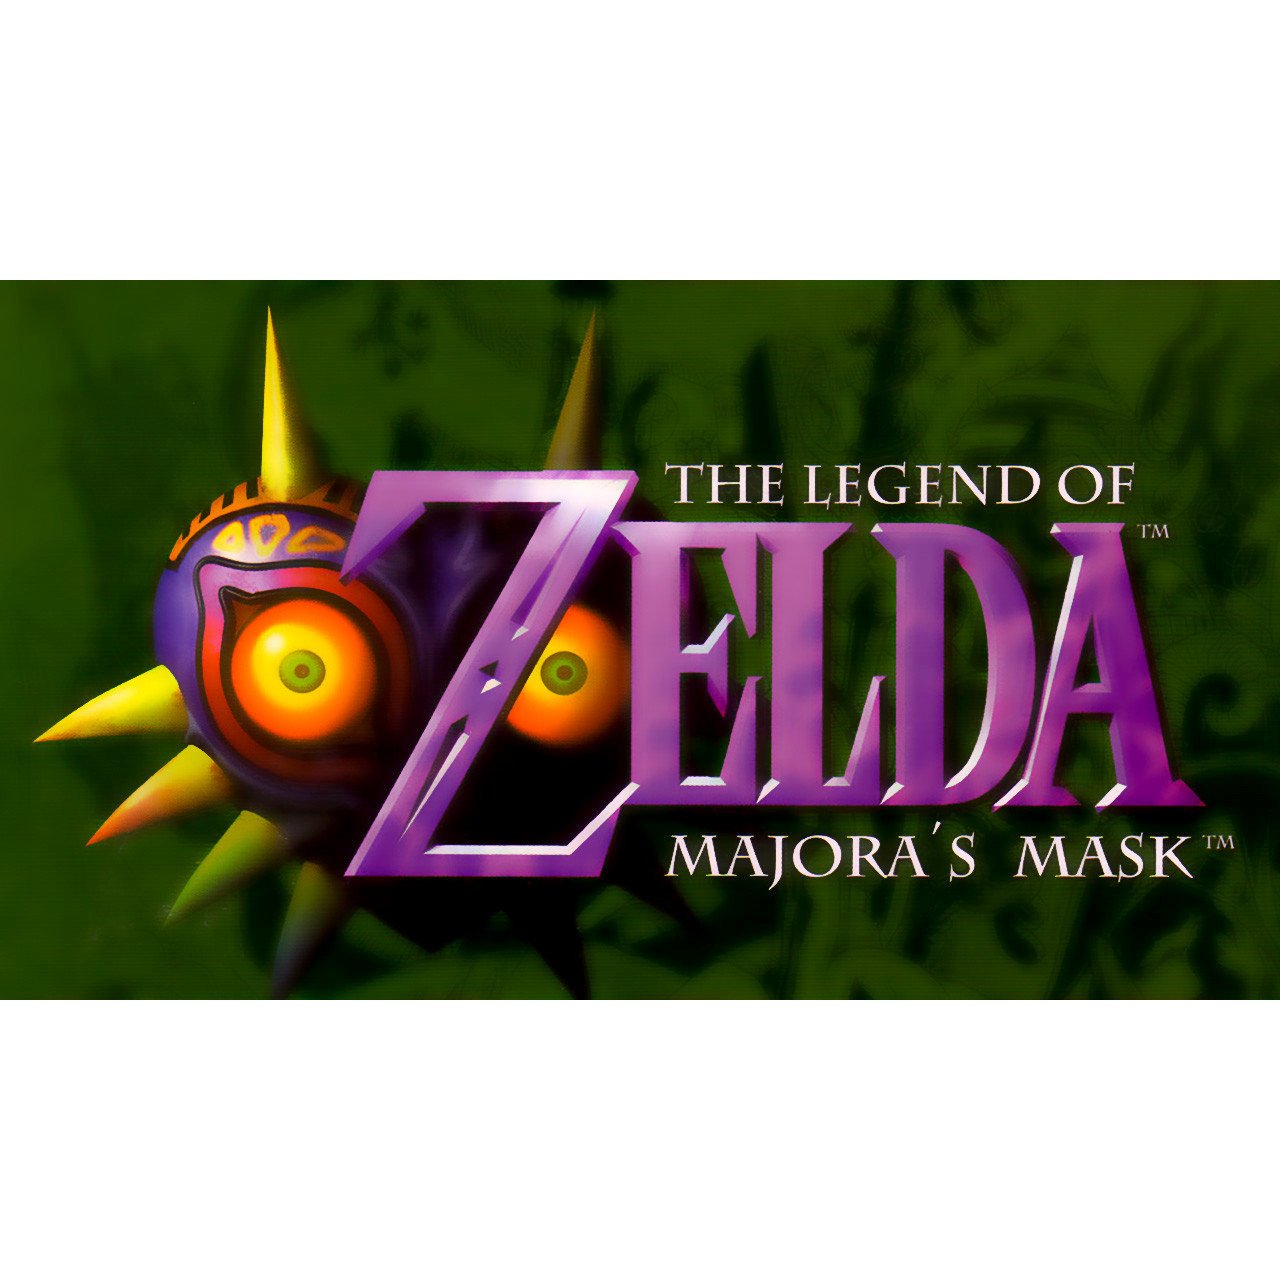 The Legend of Zelda: Majora's Mask - Nintendo 64